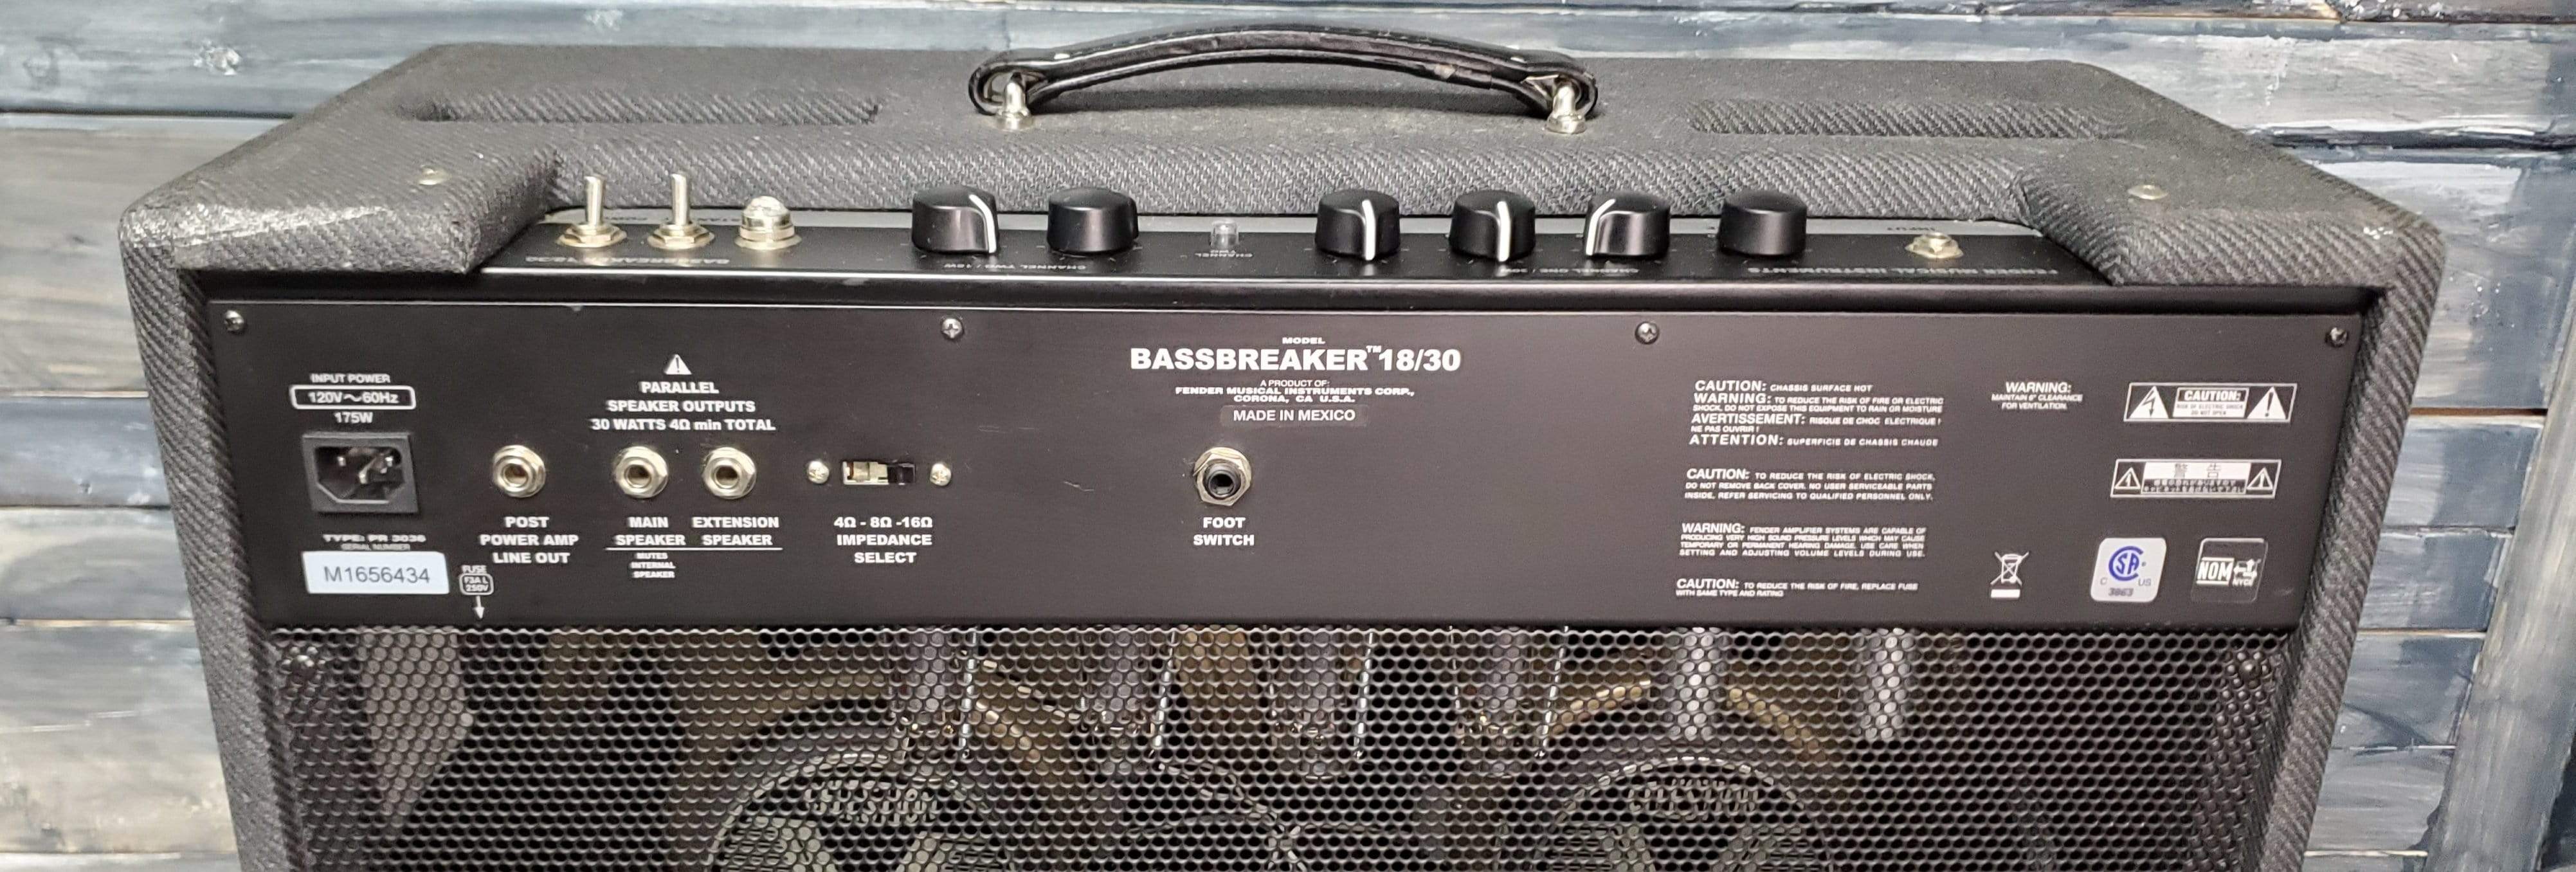 Fender Bassbreaker 18/30 - ampli guitare électrique - Stock B